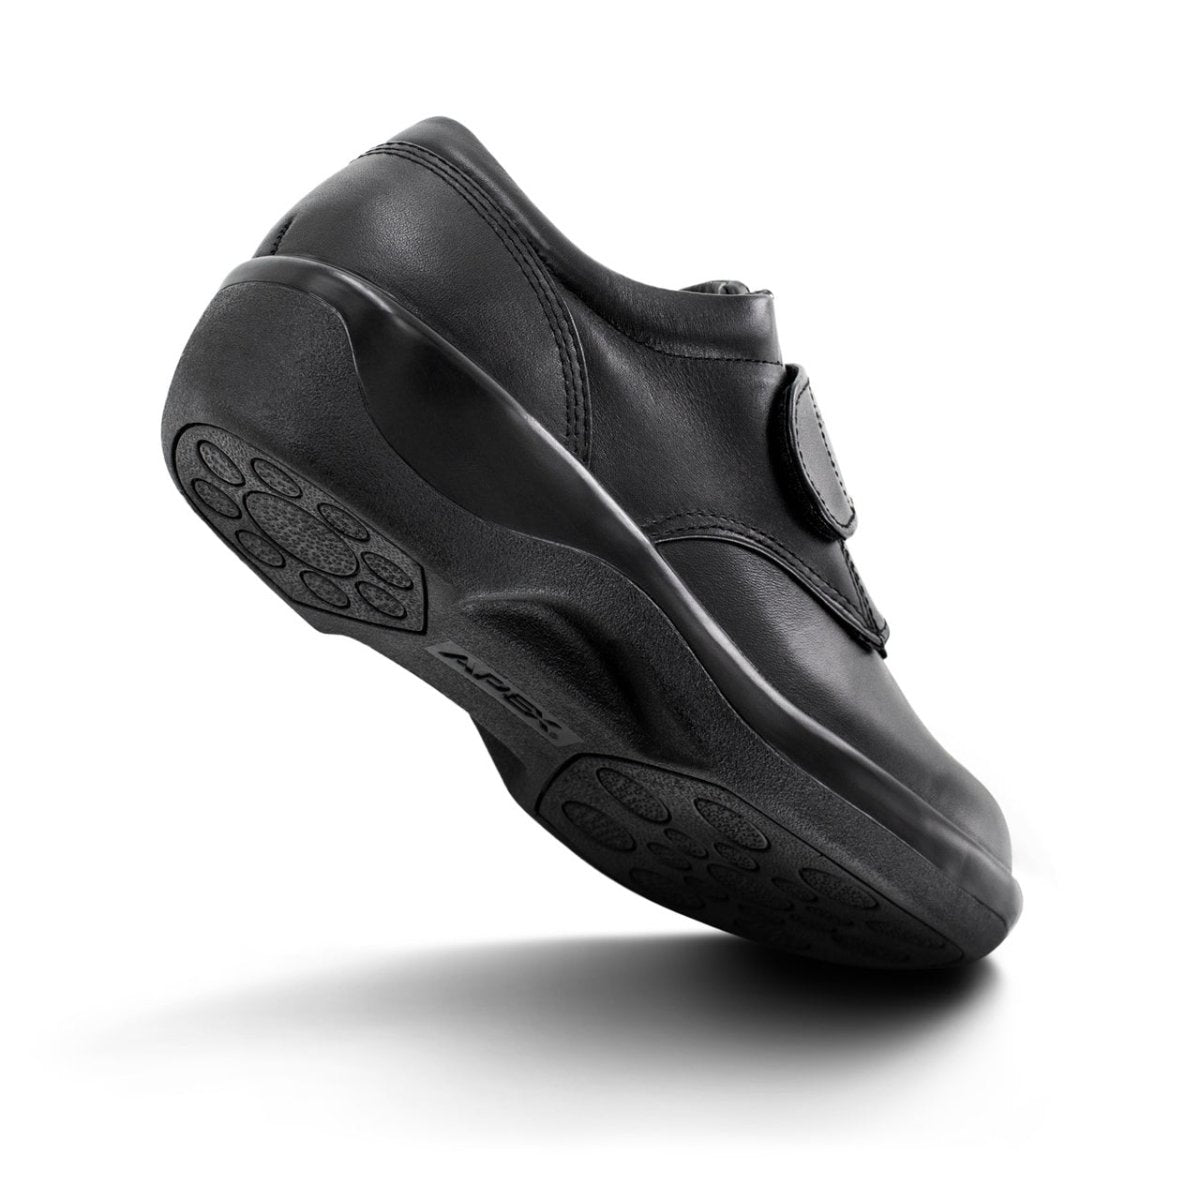 APEX B3000W AMBULATOR BIOMECHANICAL WOMEN'S SINGLE STRAP CASUAL SHOE IN BLACK - TLW Shoes